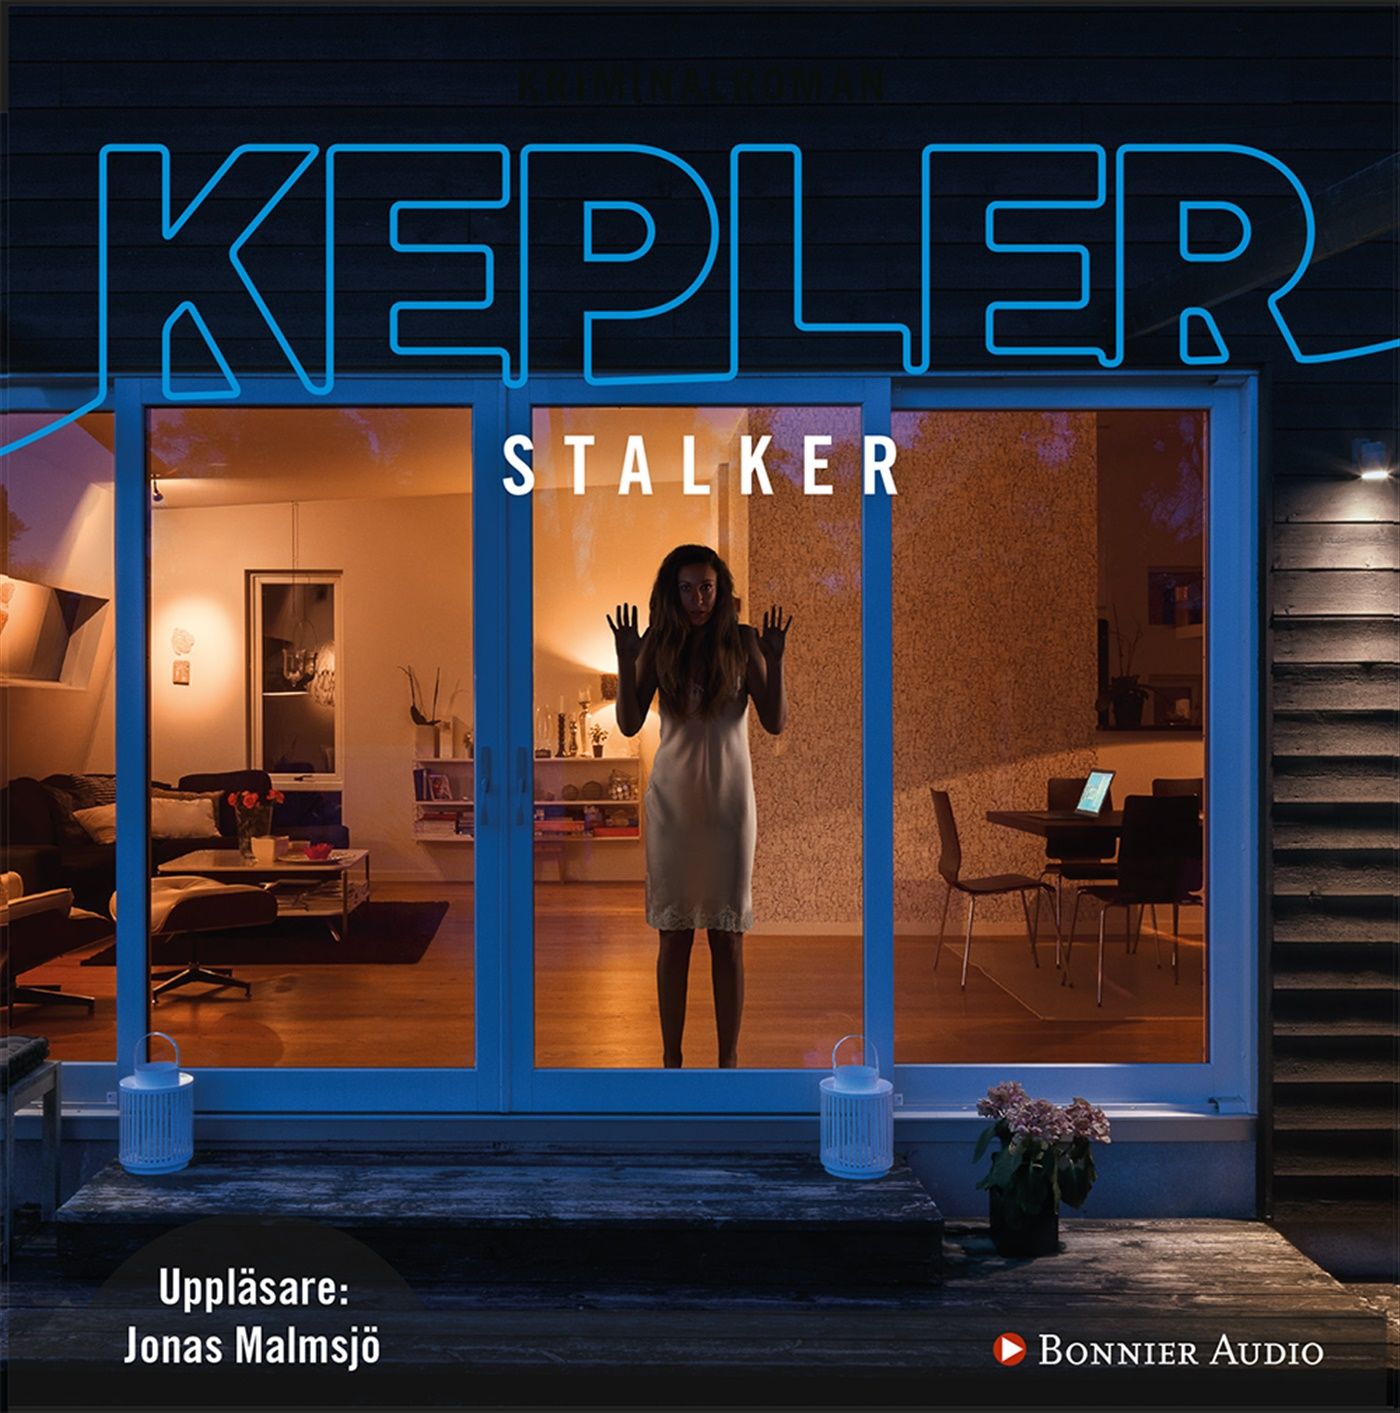 Stalker, audiobook by Lars Kepler